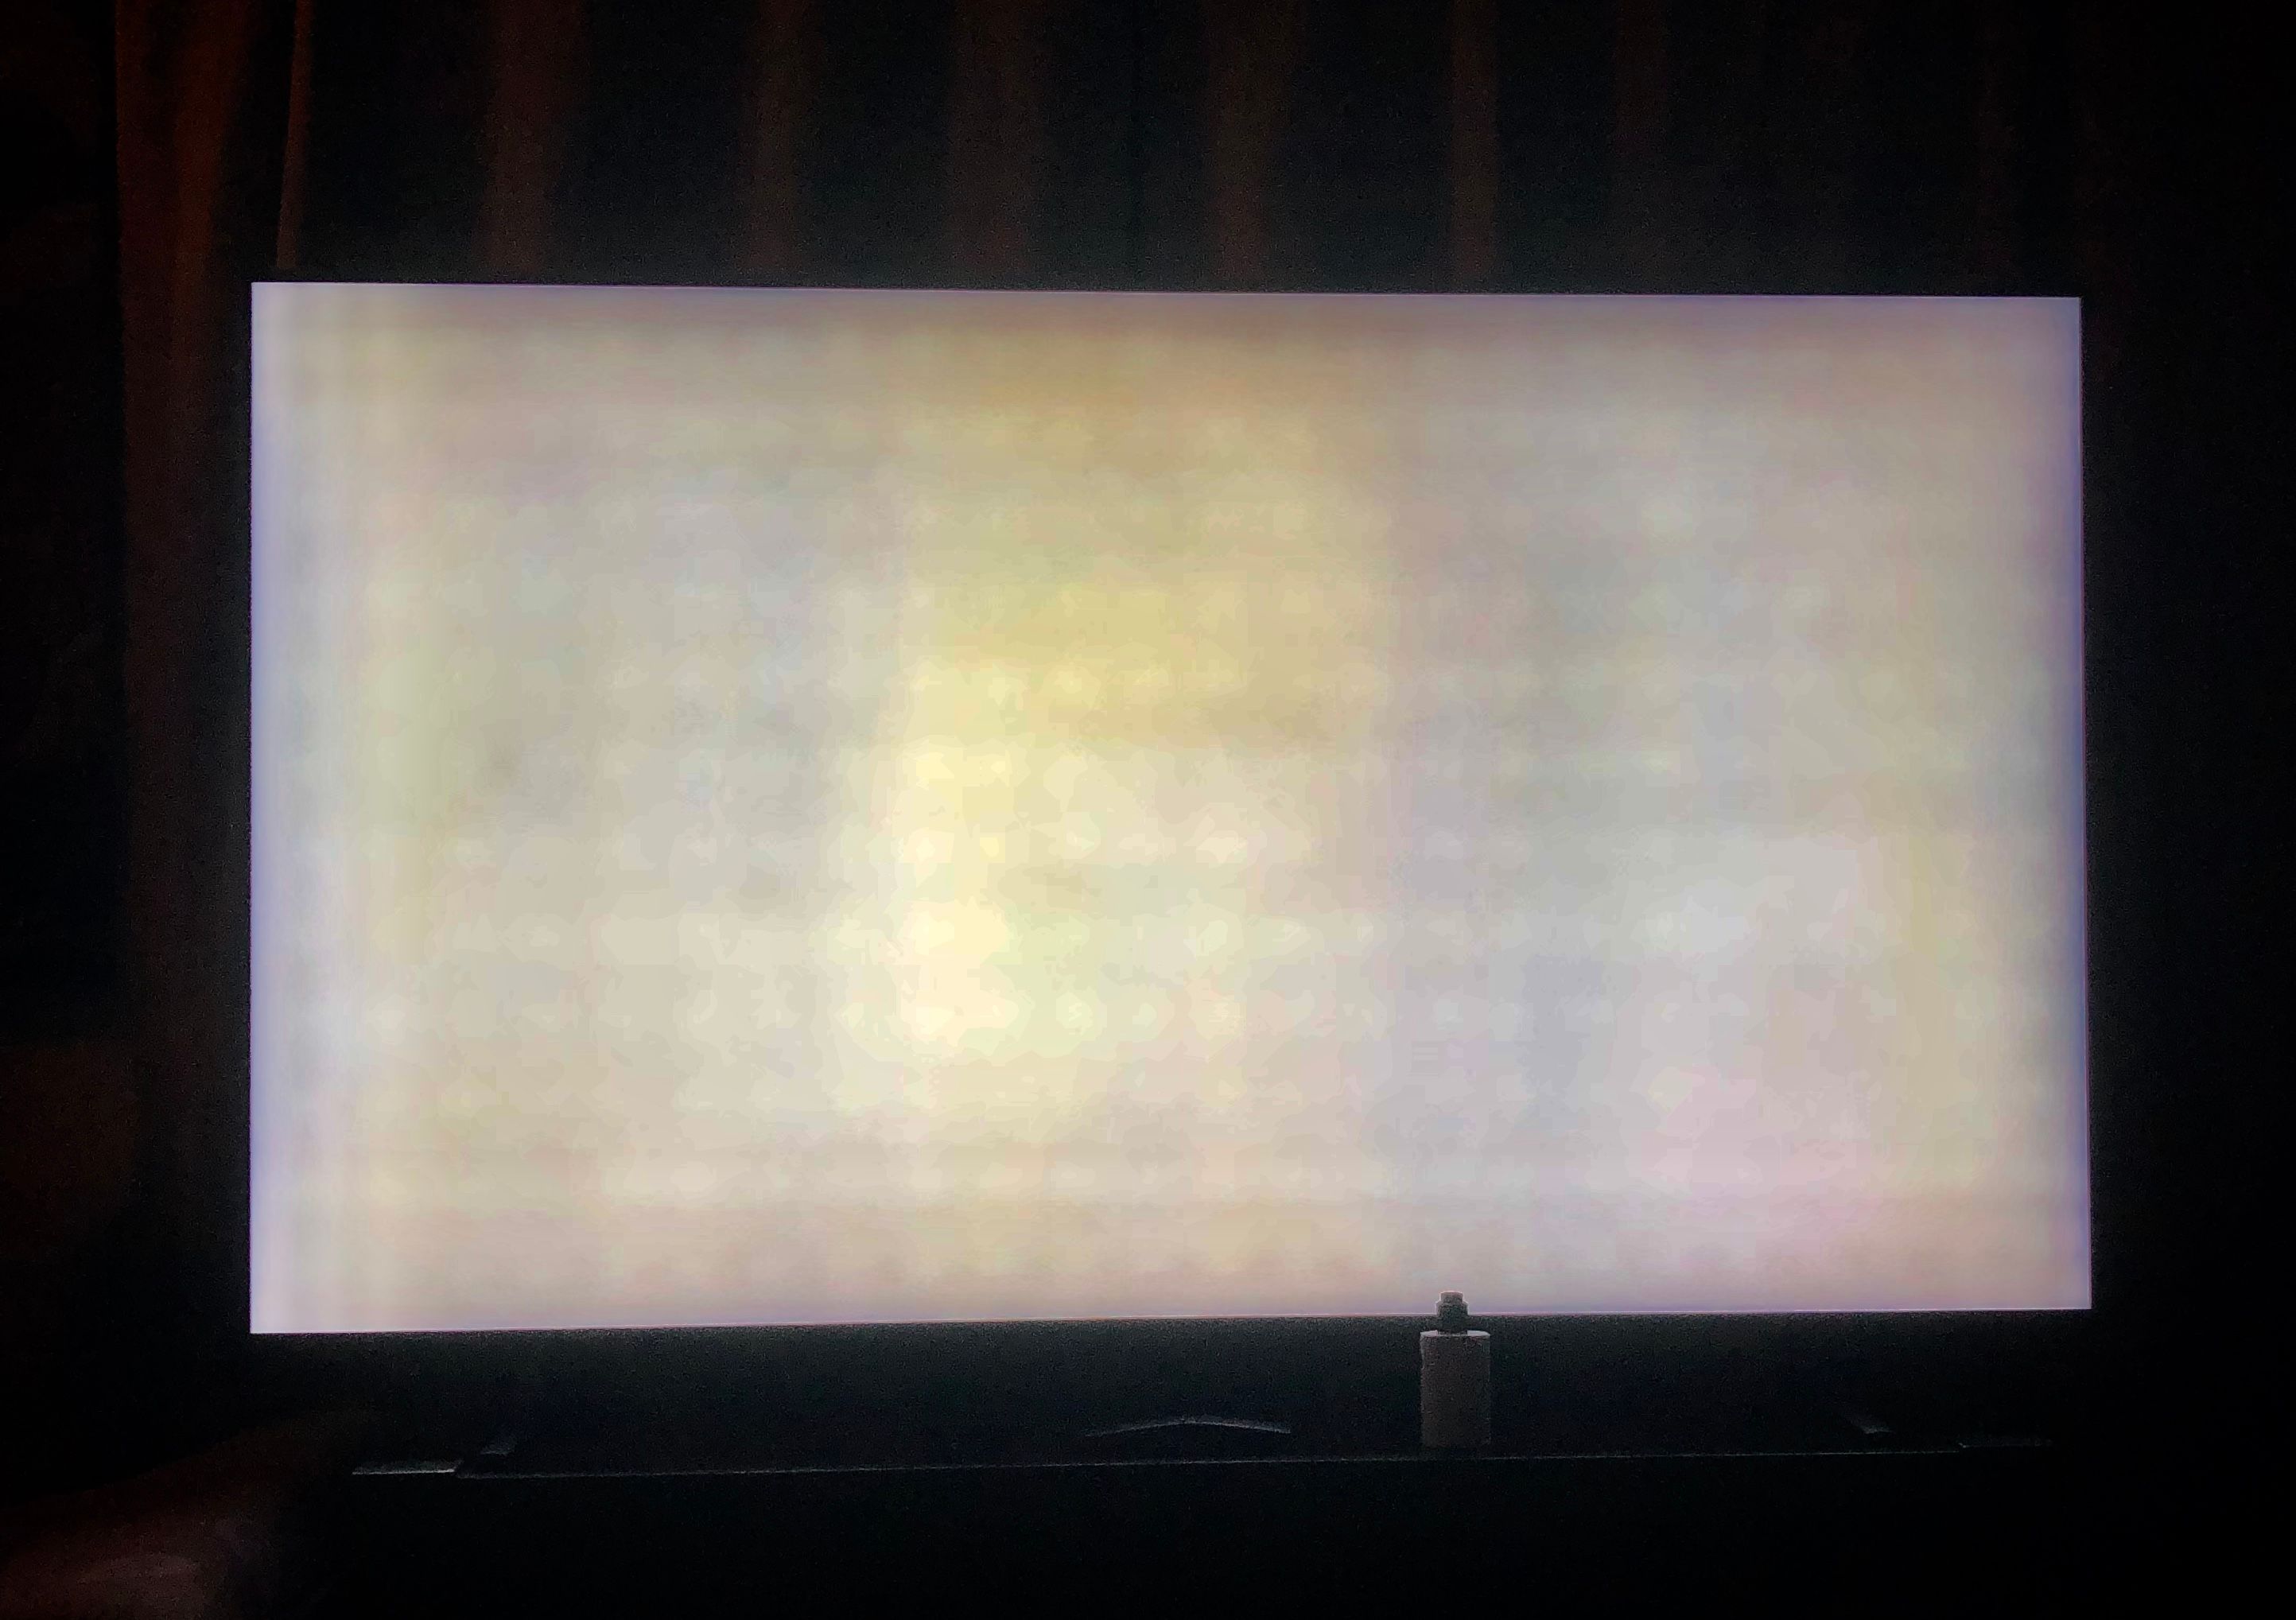 Small White Circles on TV screen - Samsung Community